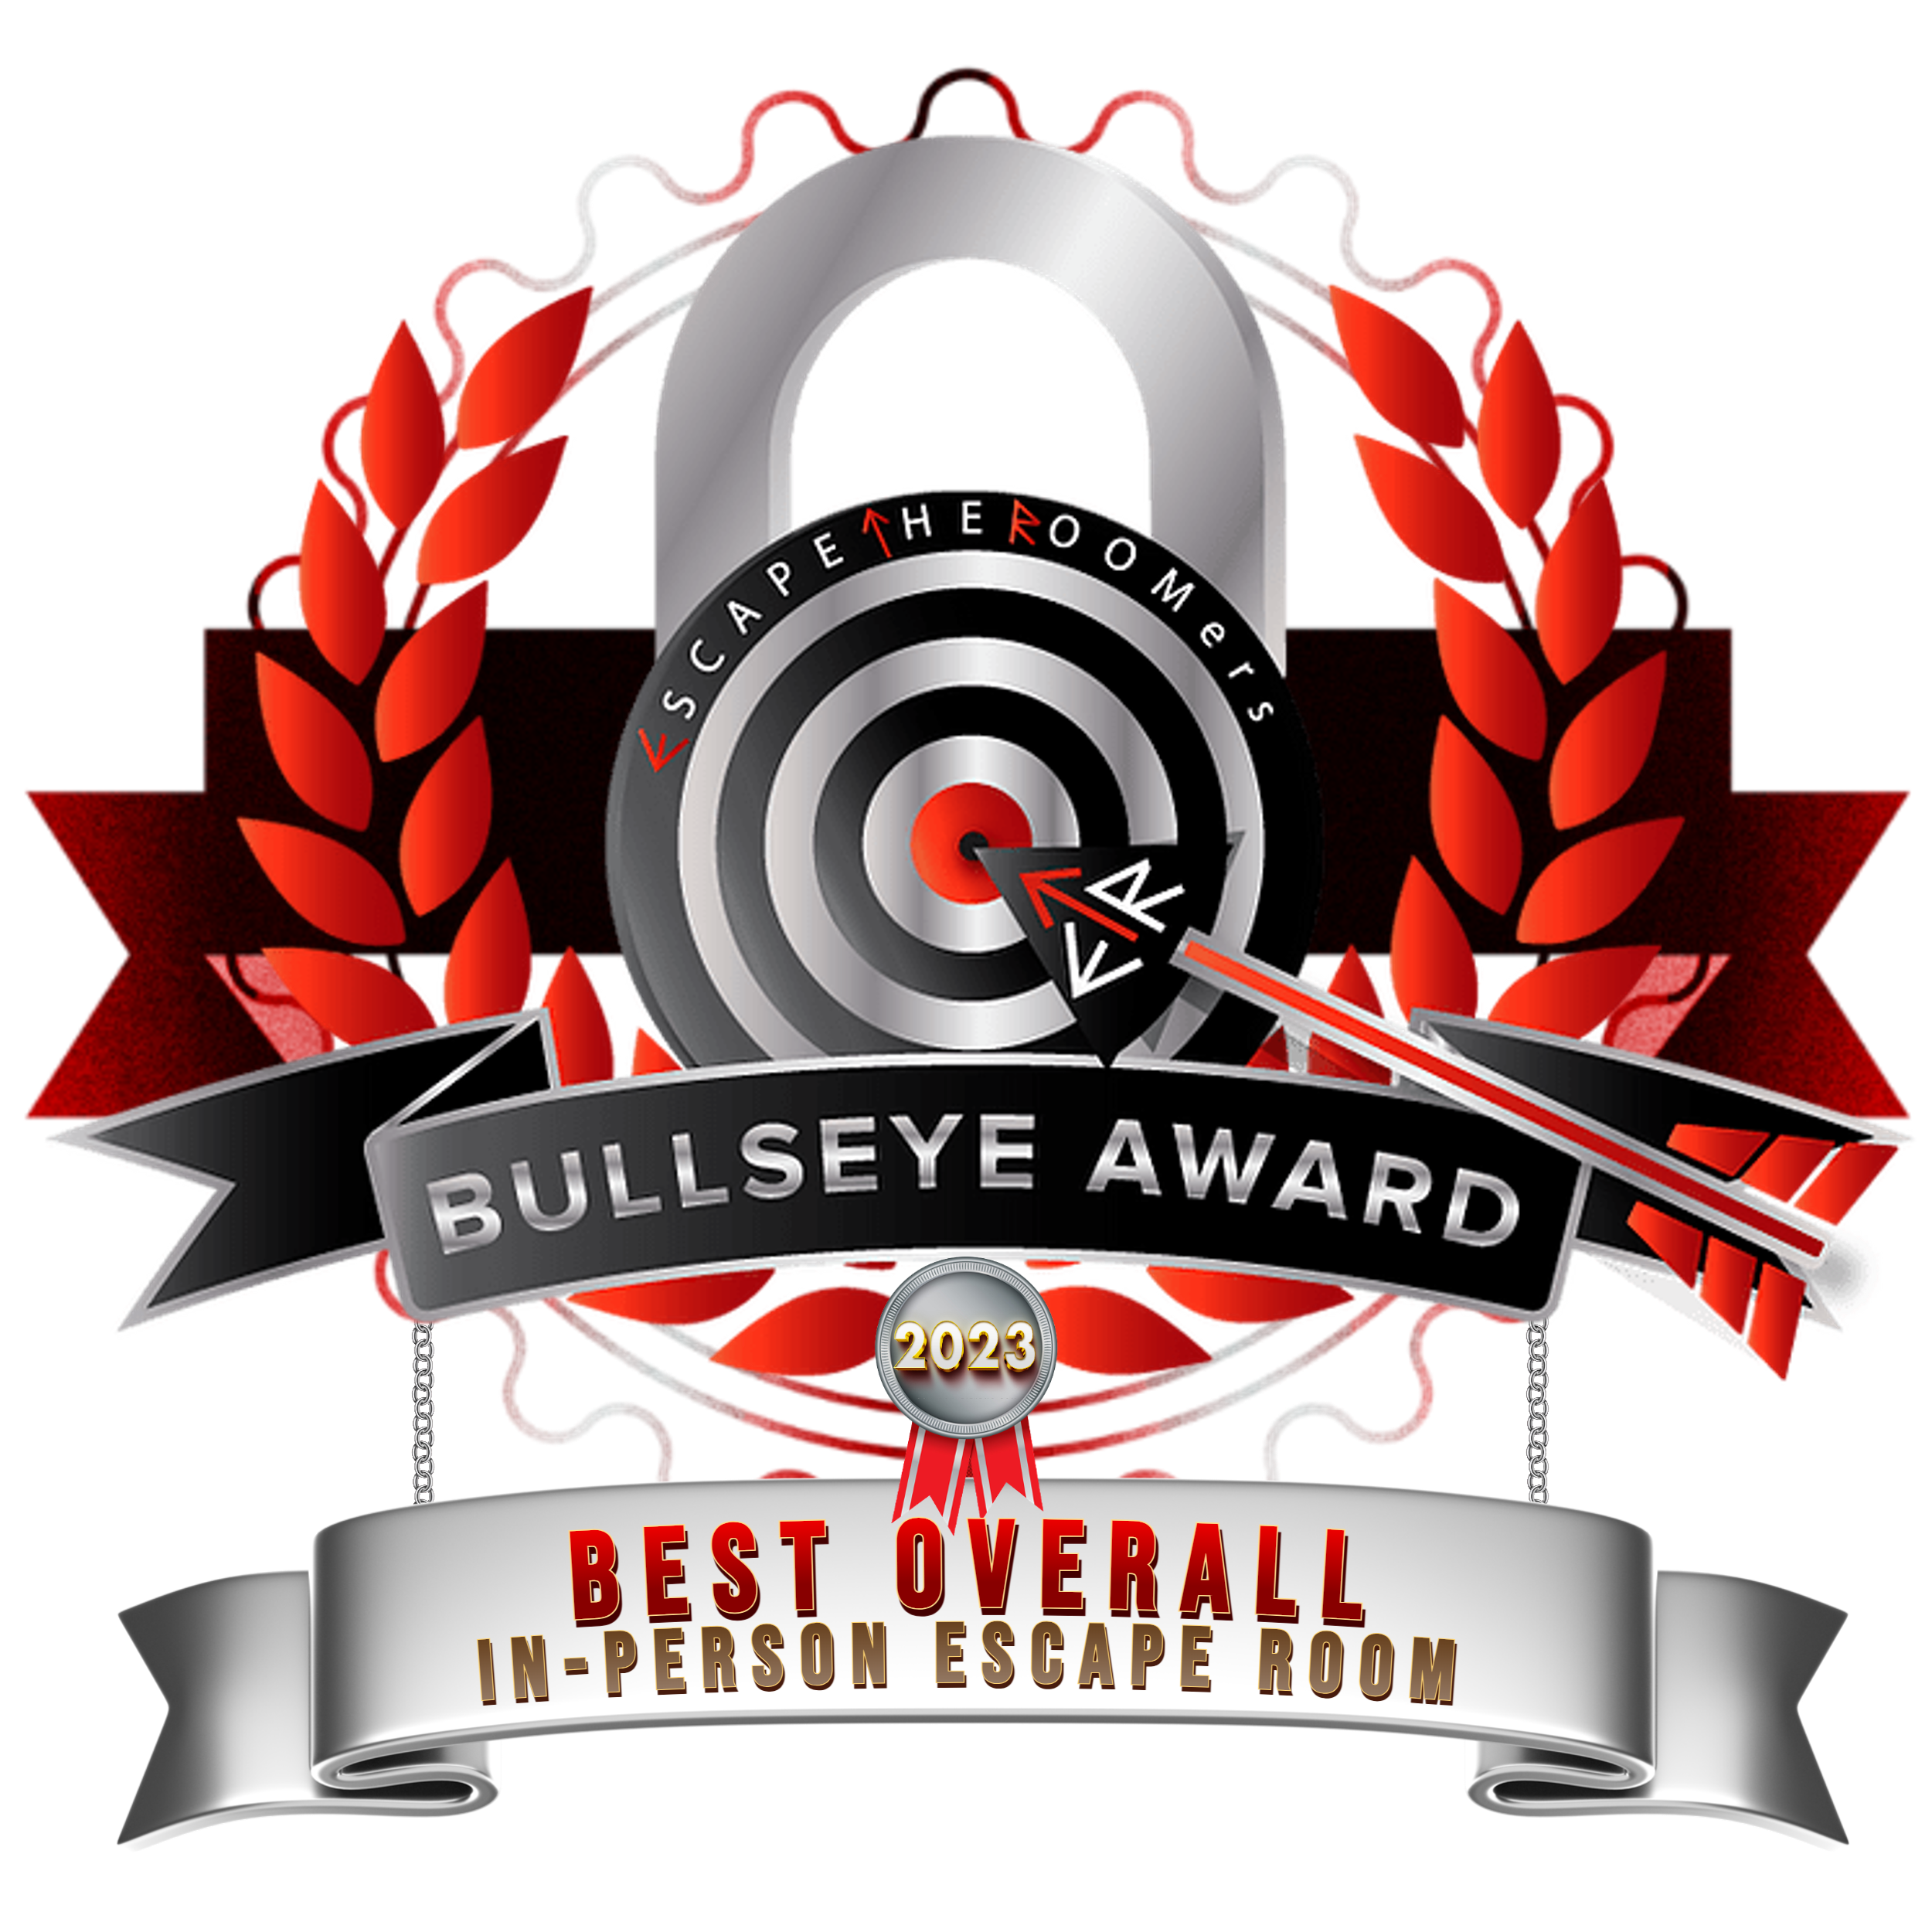 Bullseye Award 2023 Escapetheroomers